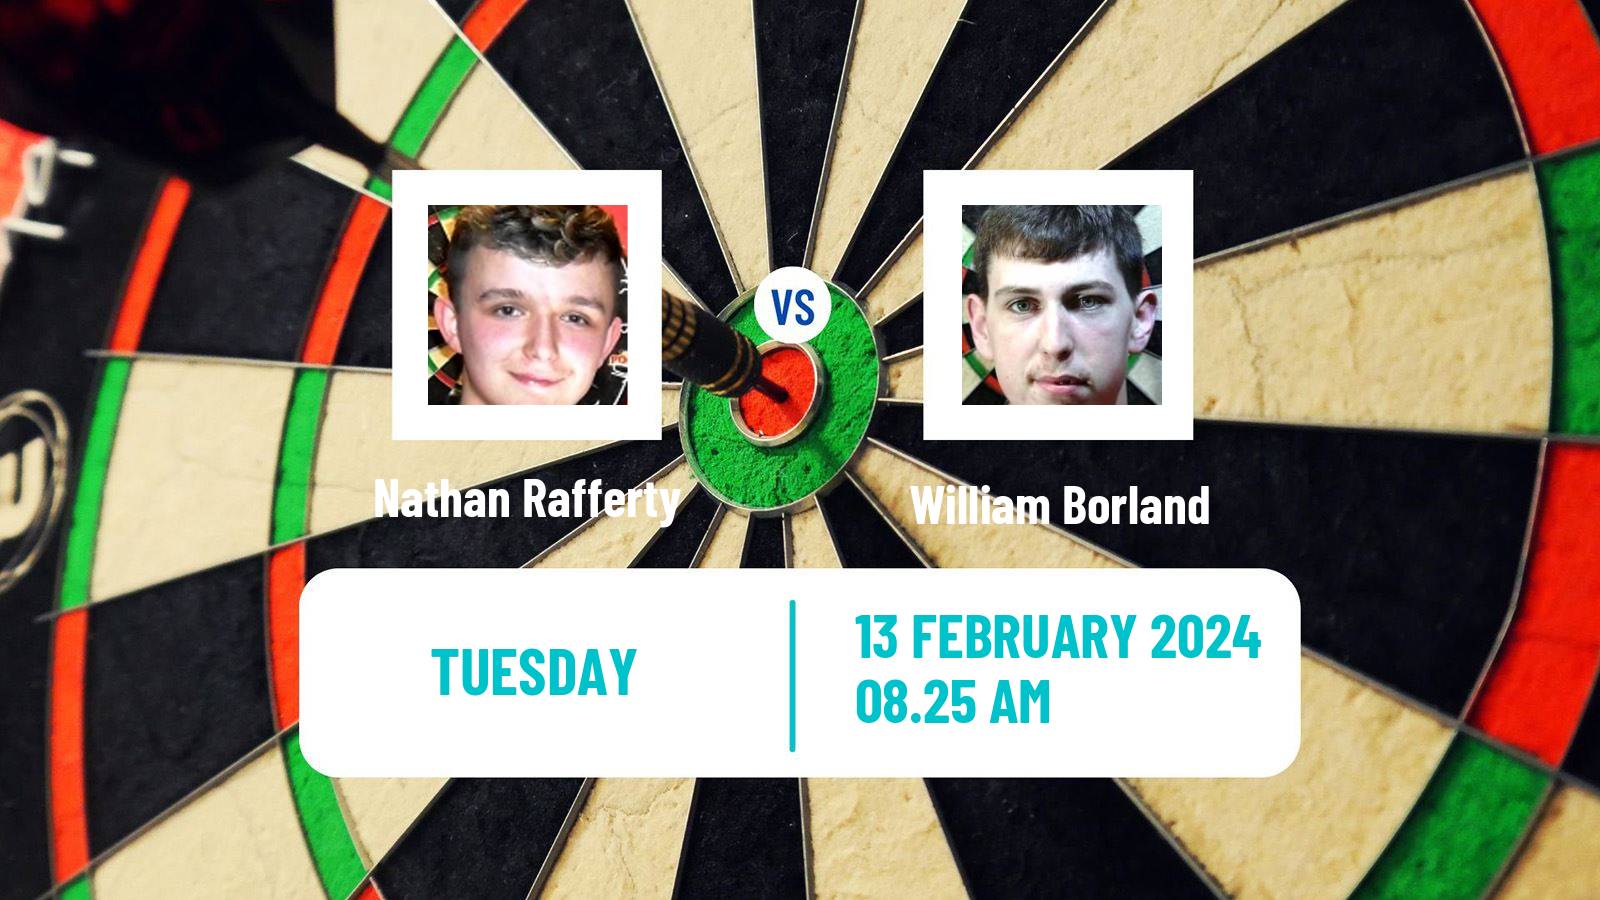 Darts Players Championship 2 Nathan Rafferty - William Borland